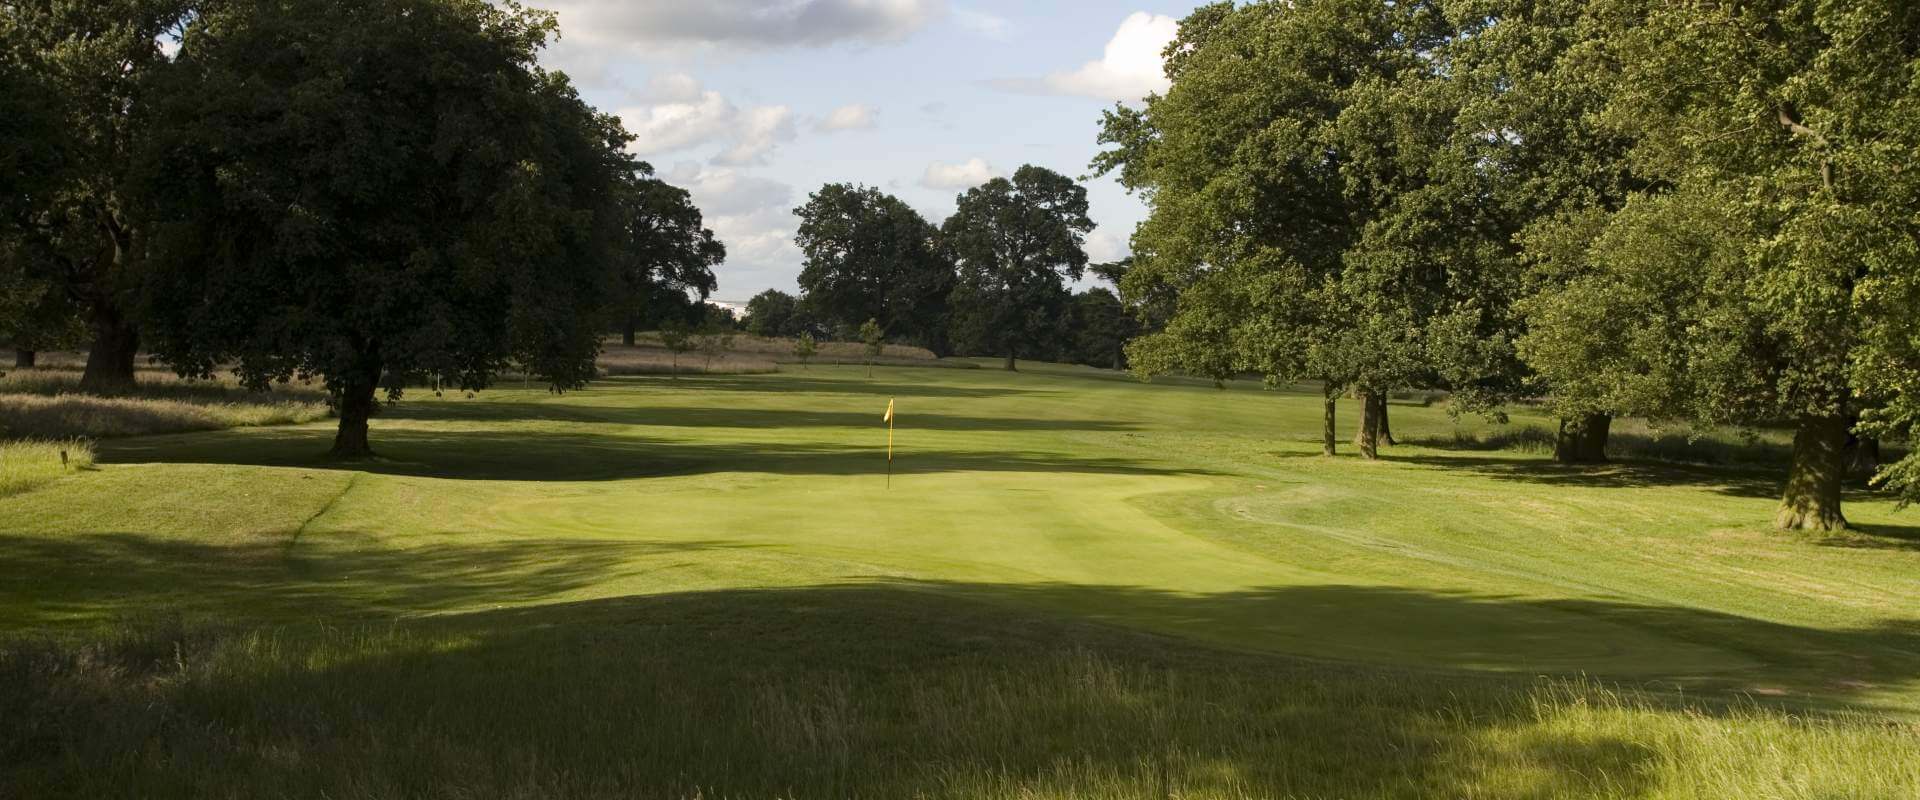 Luton Hoo Golf Club Course